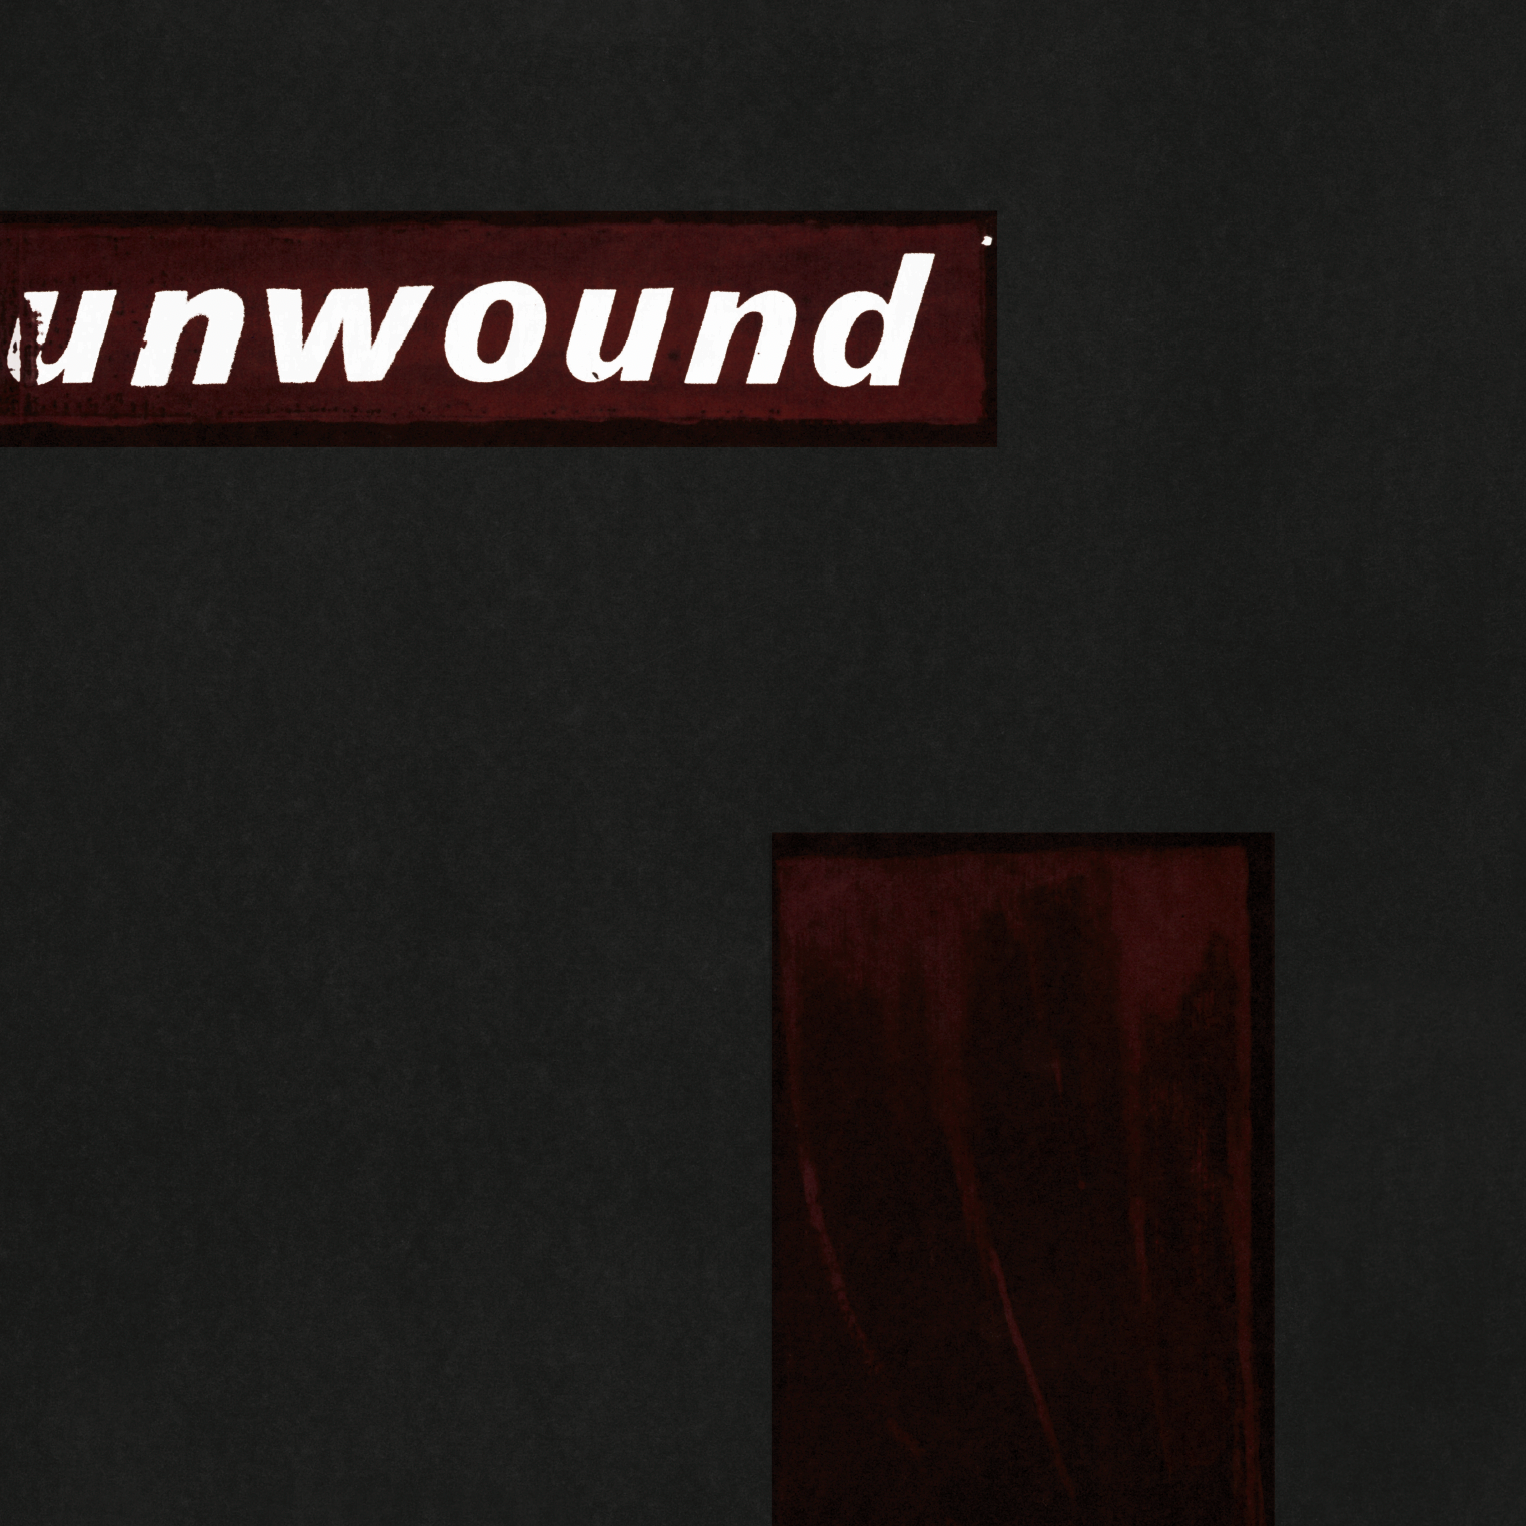 Unwound